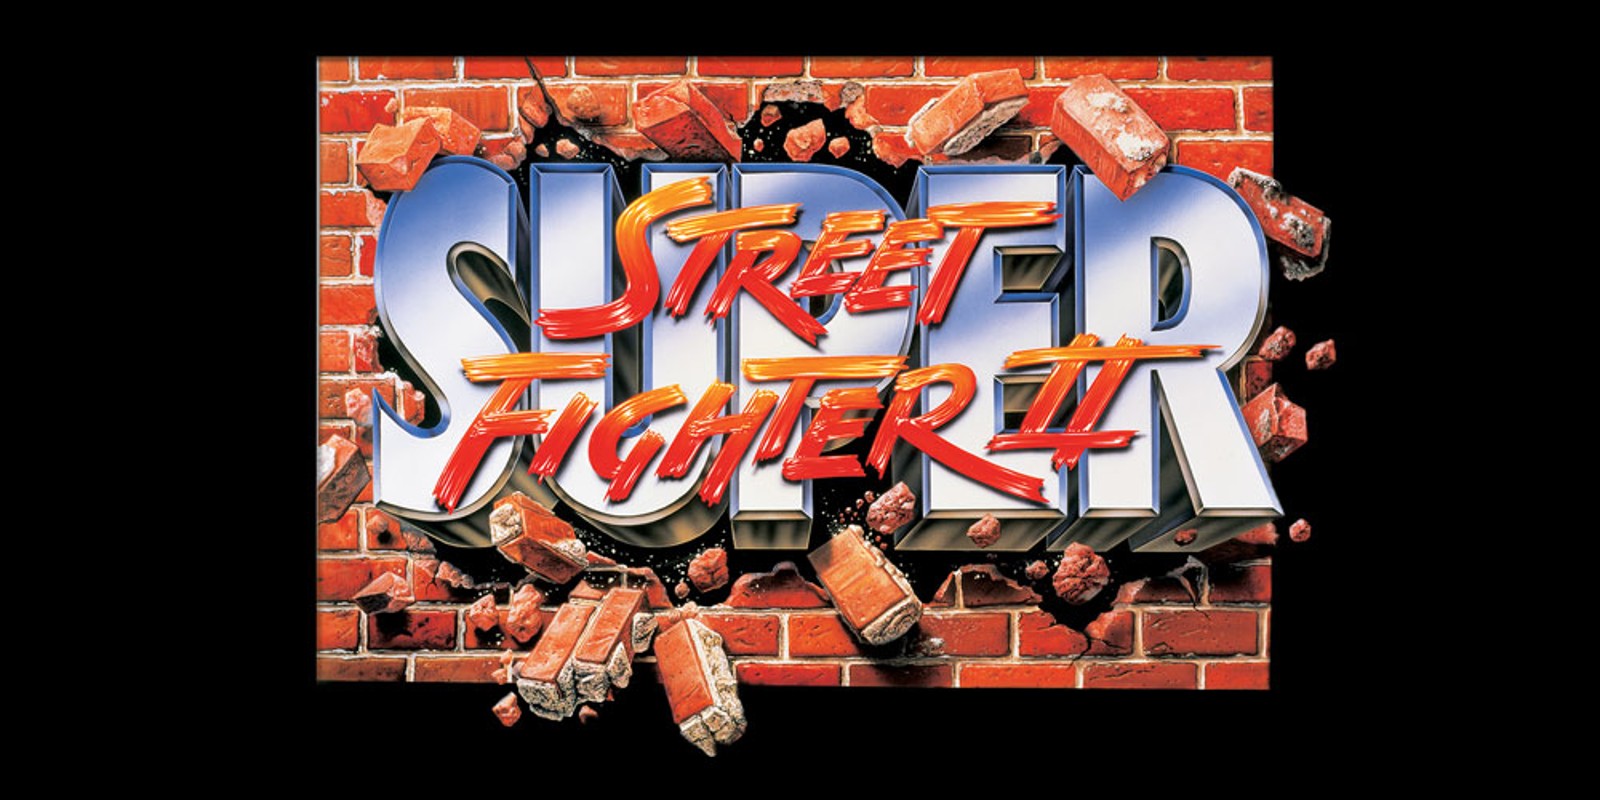 Super Street Fighter II SNES: CheatS, Dicas e Codes